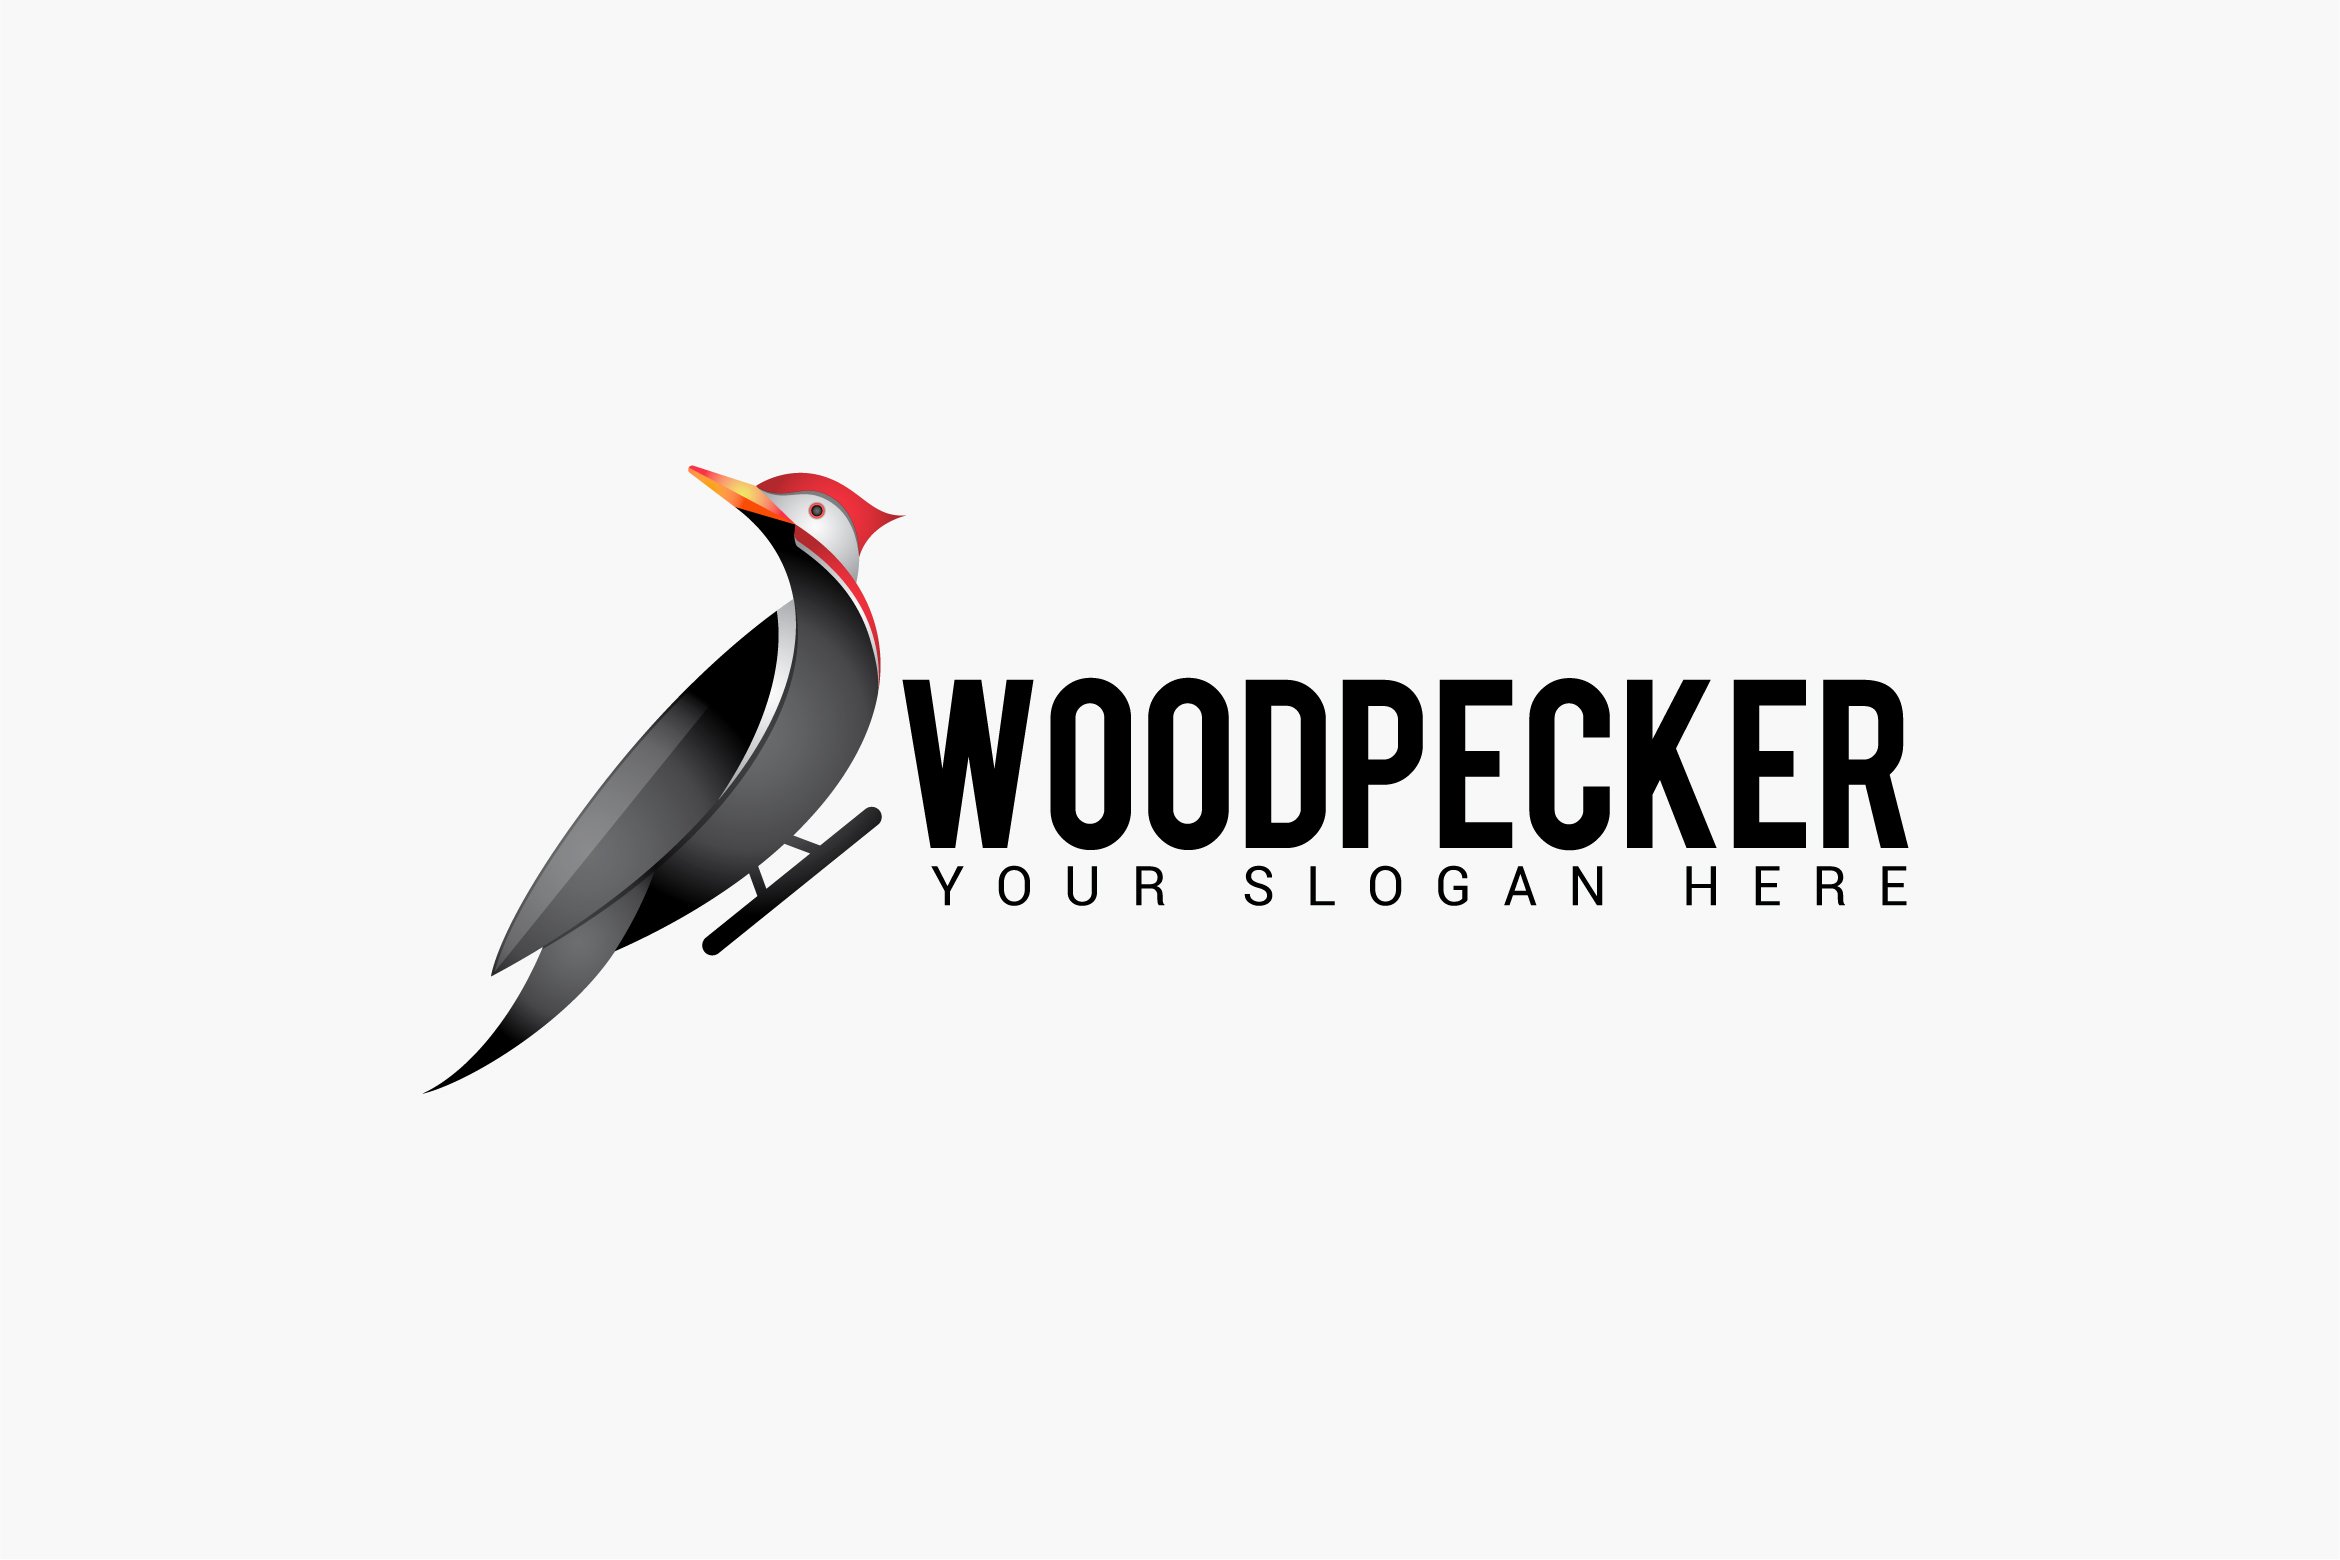 woodpecker logo cover image.